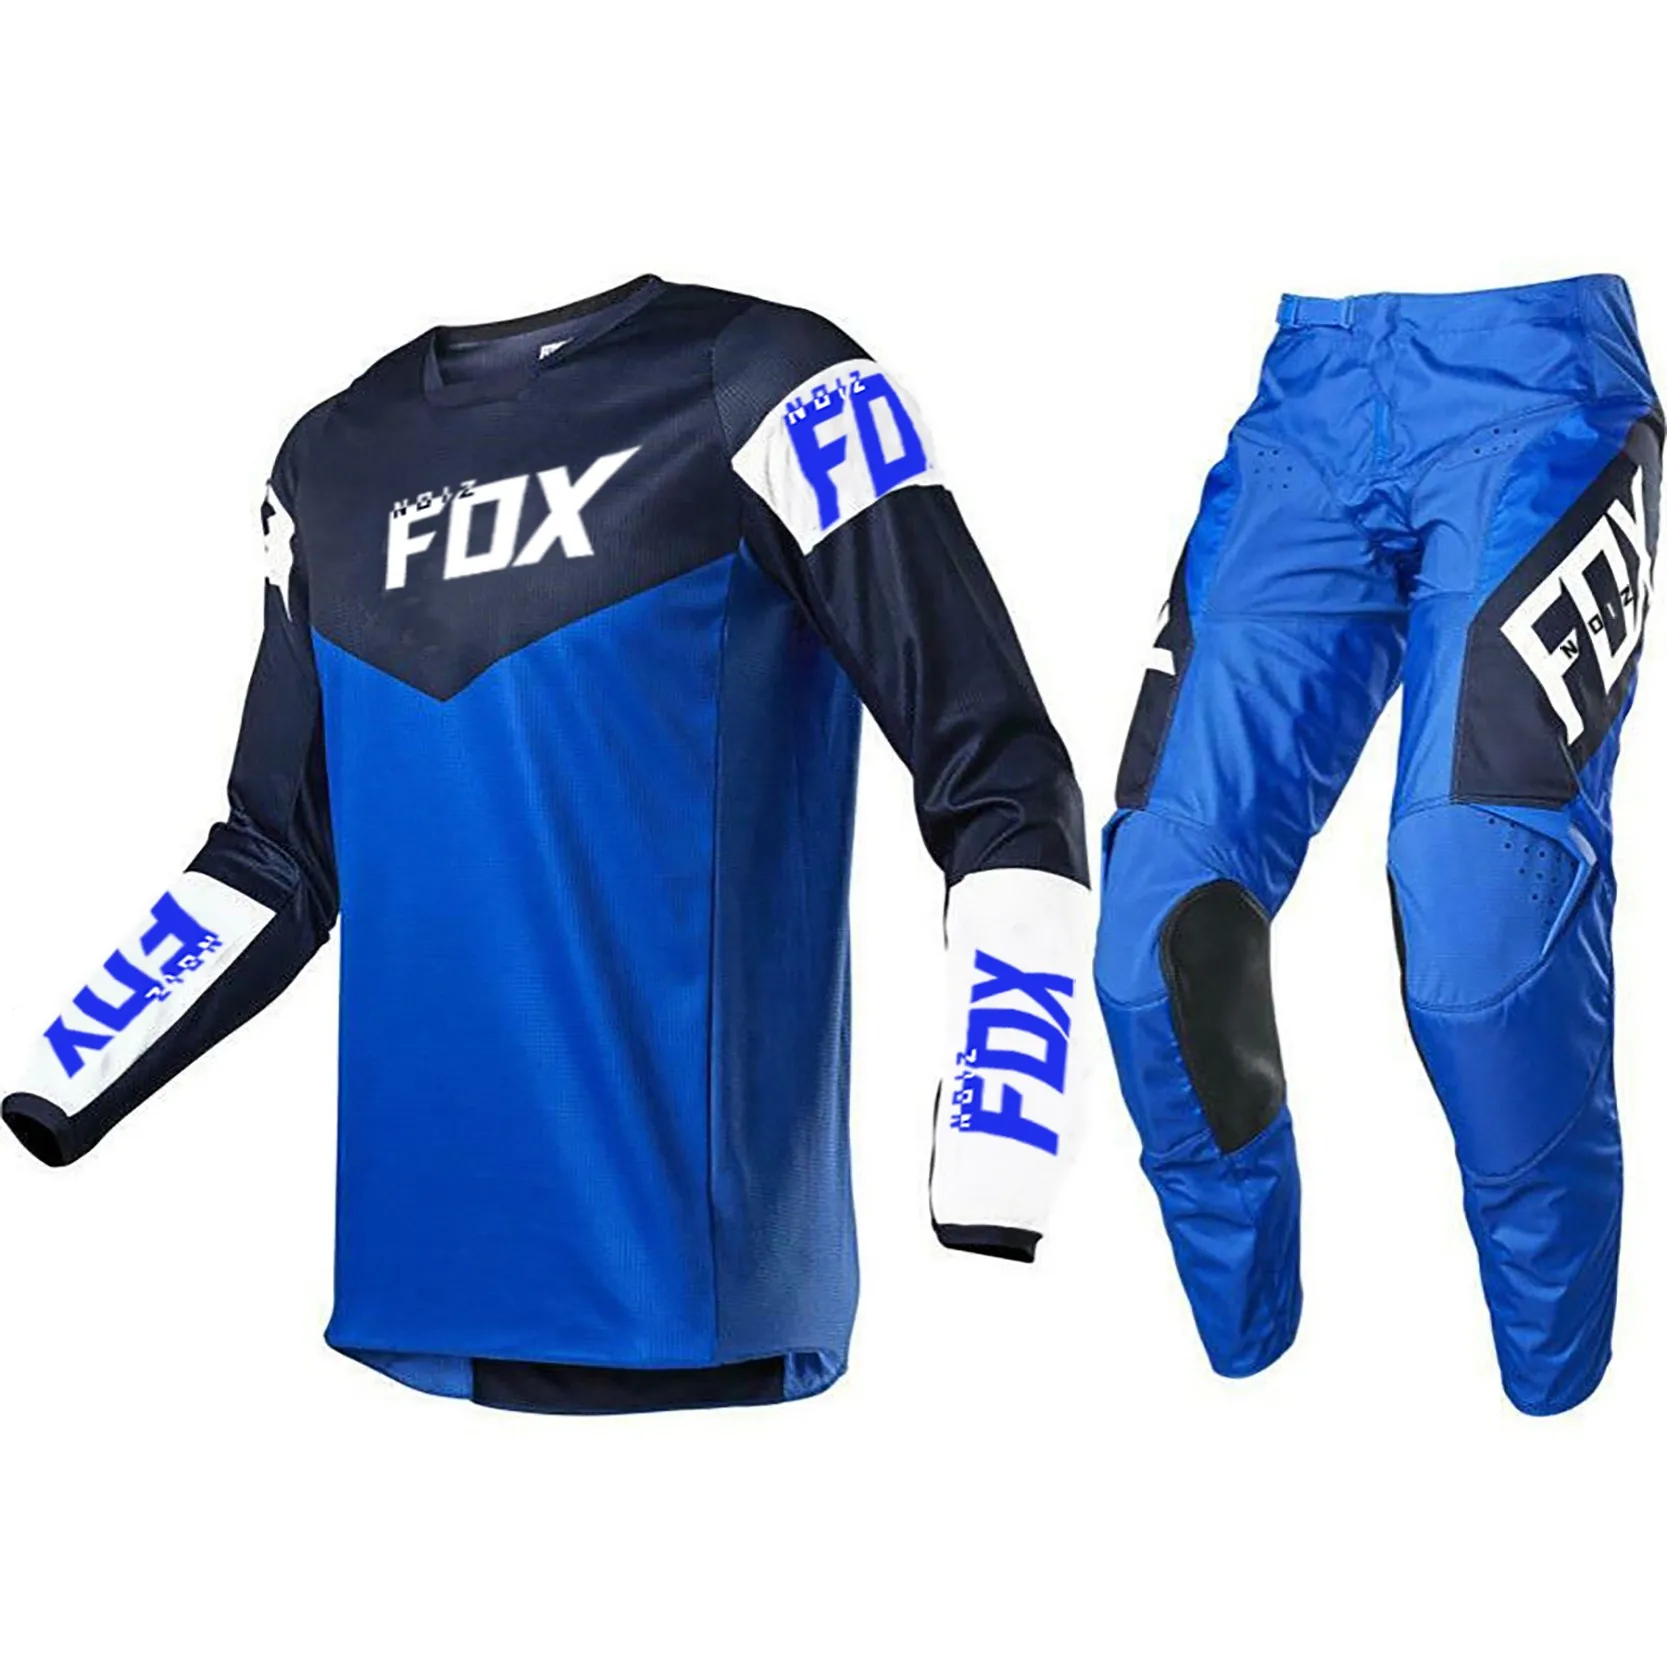 

Motocross 180 360 Trice Lux Merz Mirer Skew Gear Set Jersey Pants Adult Kits Offroad MX Dirt Bike Racing Moto Cycling Suit Mens